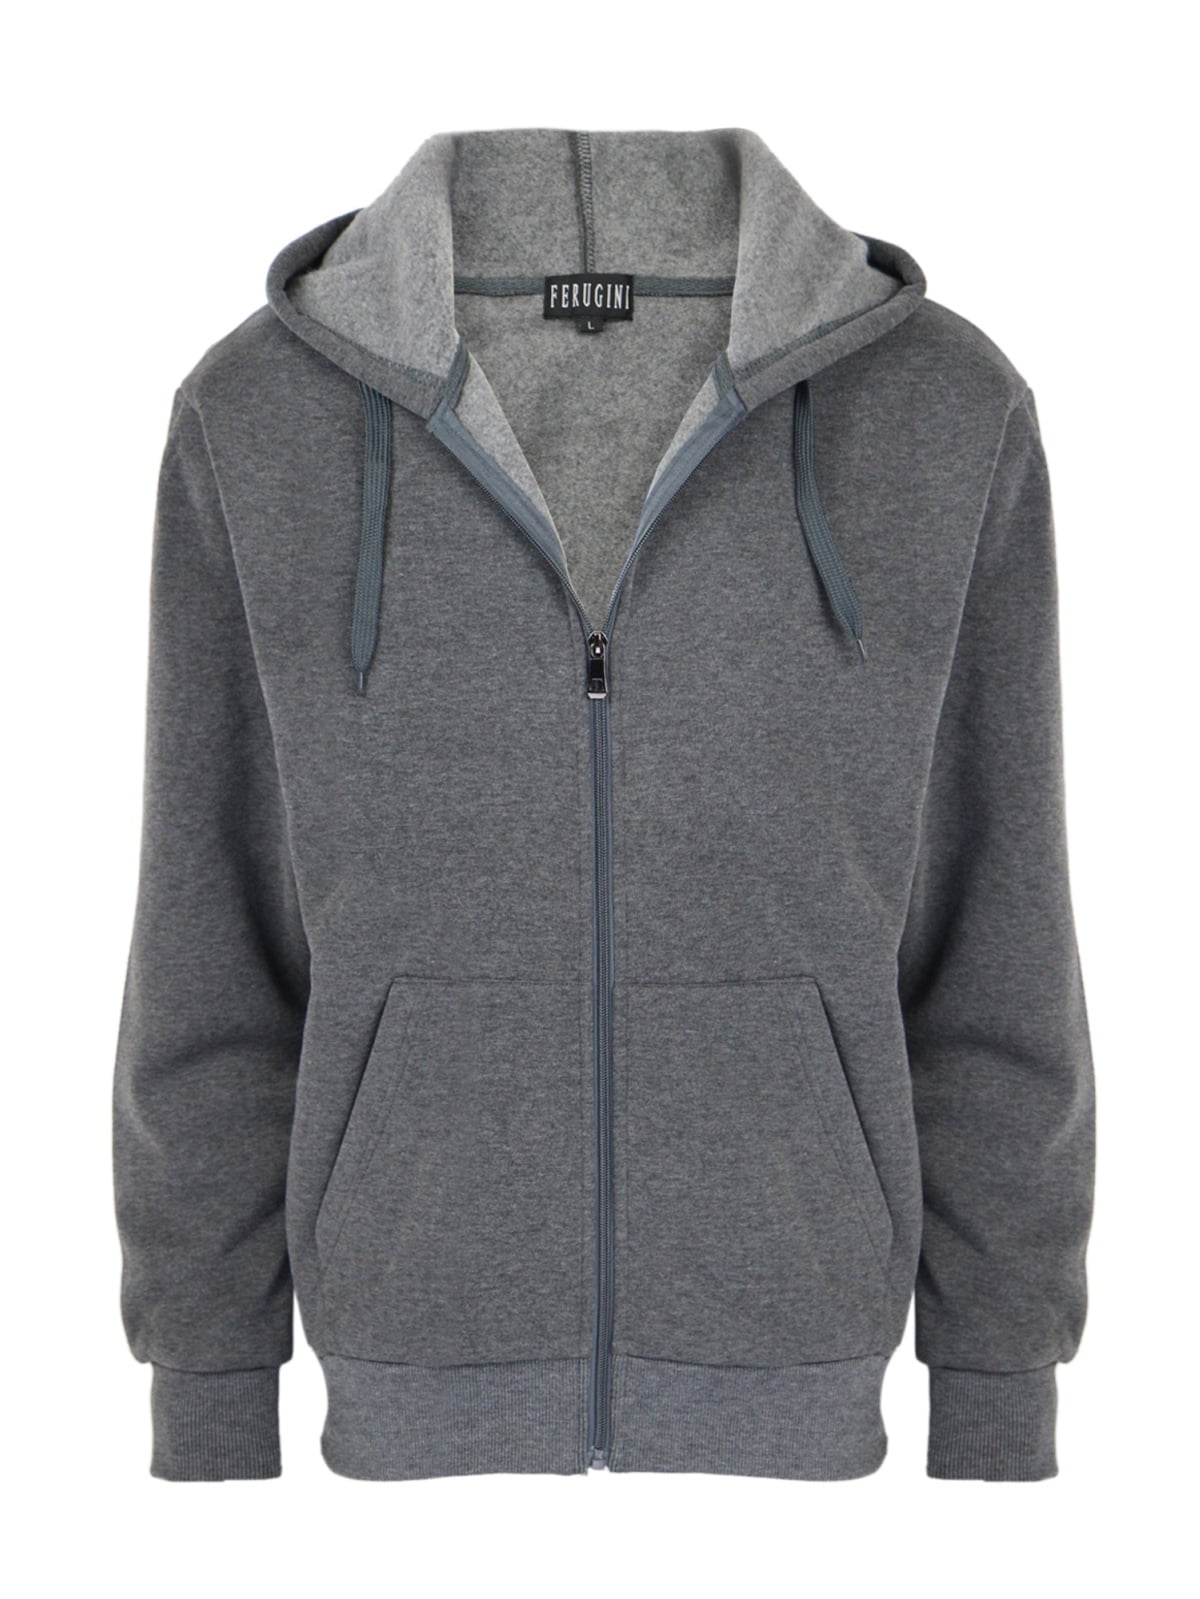 LeeHanTon Fashion Hoodies for Men Full Zip Up Sherpa Lined Sports Sweatshirts Mens Winter Fleece Fabric Jacket with Hood